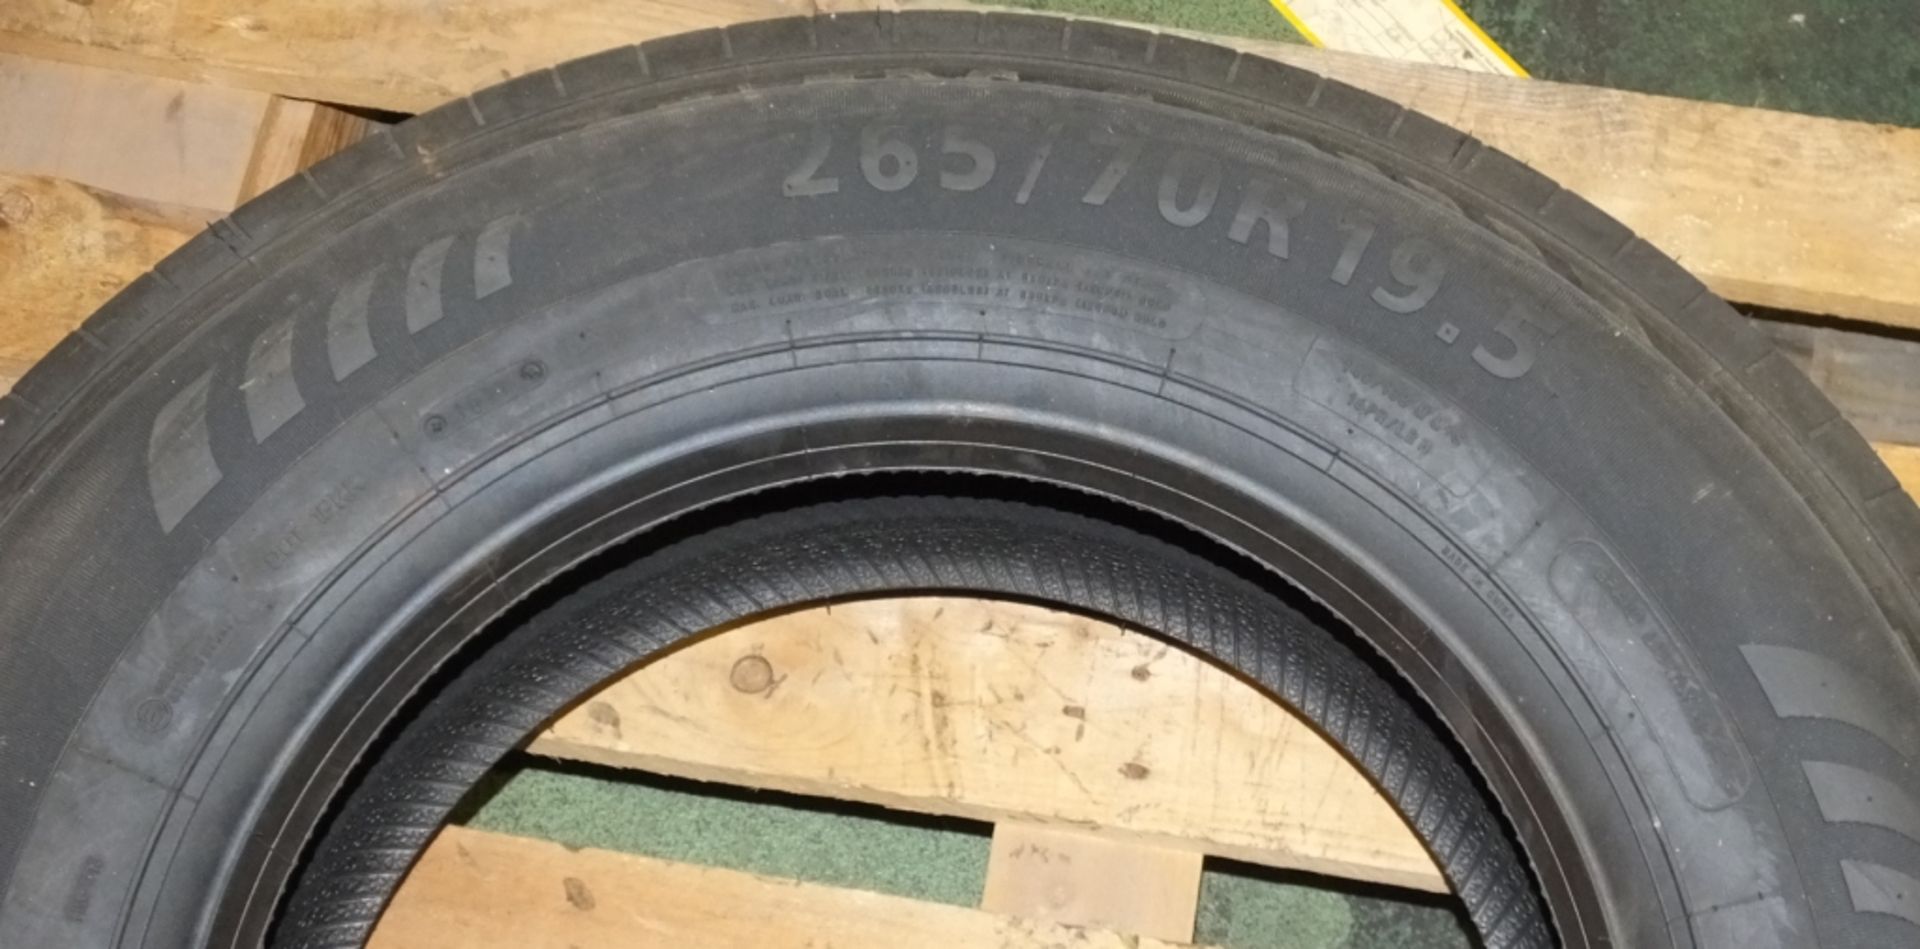 Alplus 265 / 70R 19.5 S201 tyre (new & unused) - Image 5 of 6